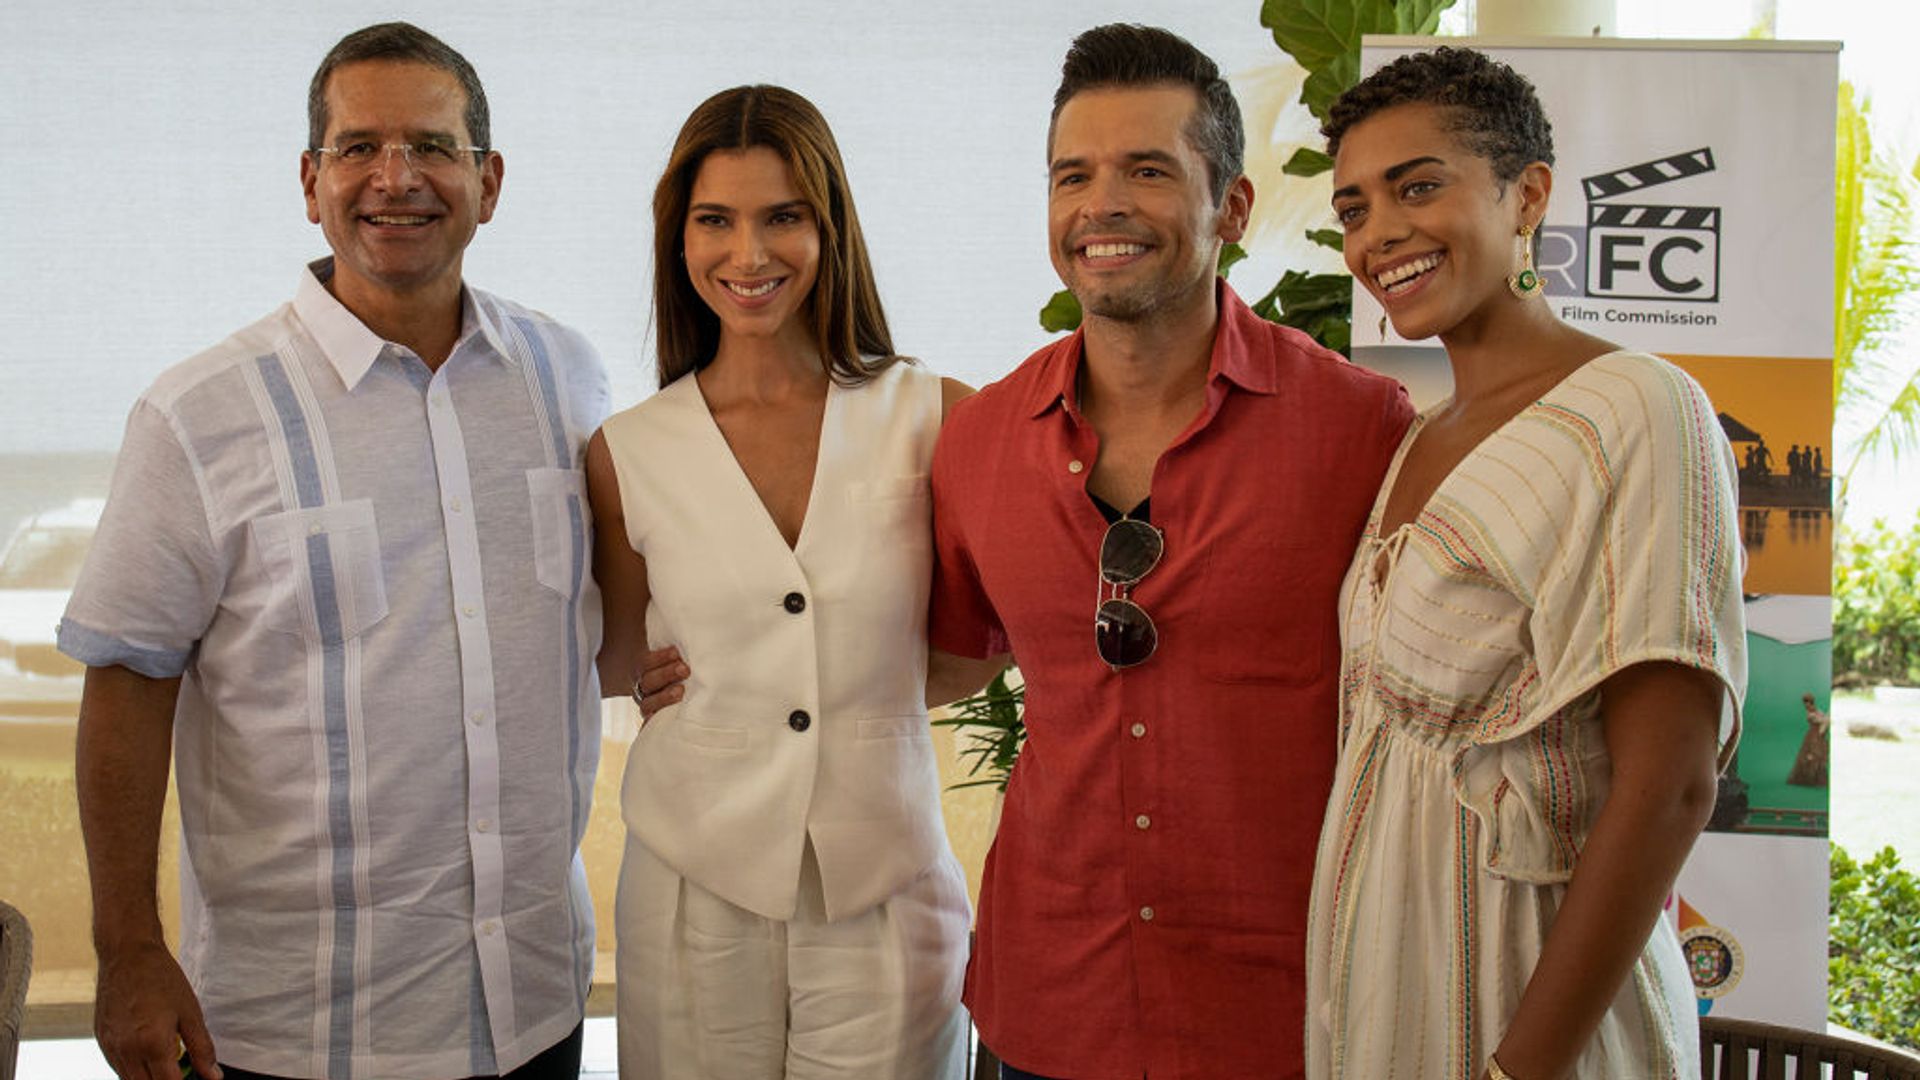 Fantasy Island stars Roselyn Sánchez, Kiara Barnes and John Gabriel Rodriquez pose together for a photo